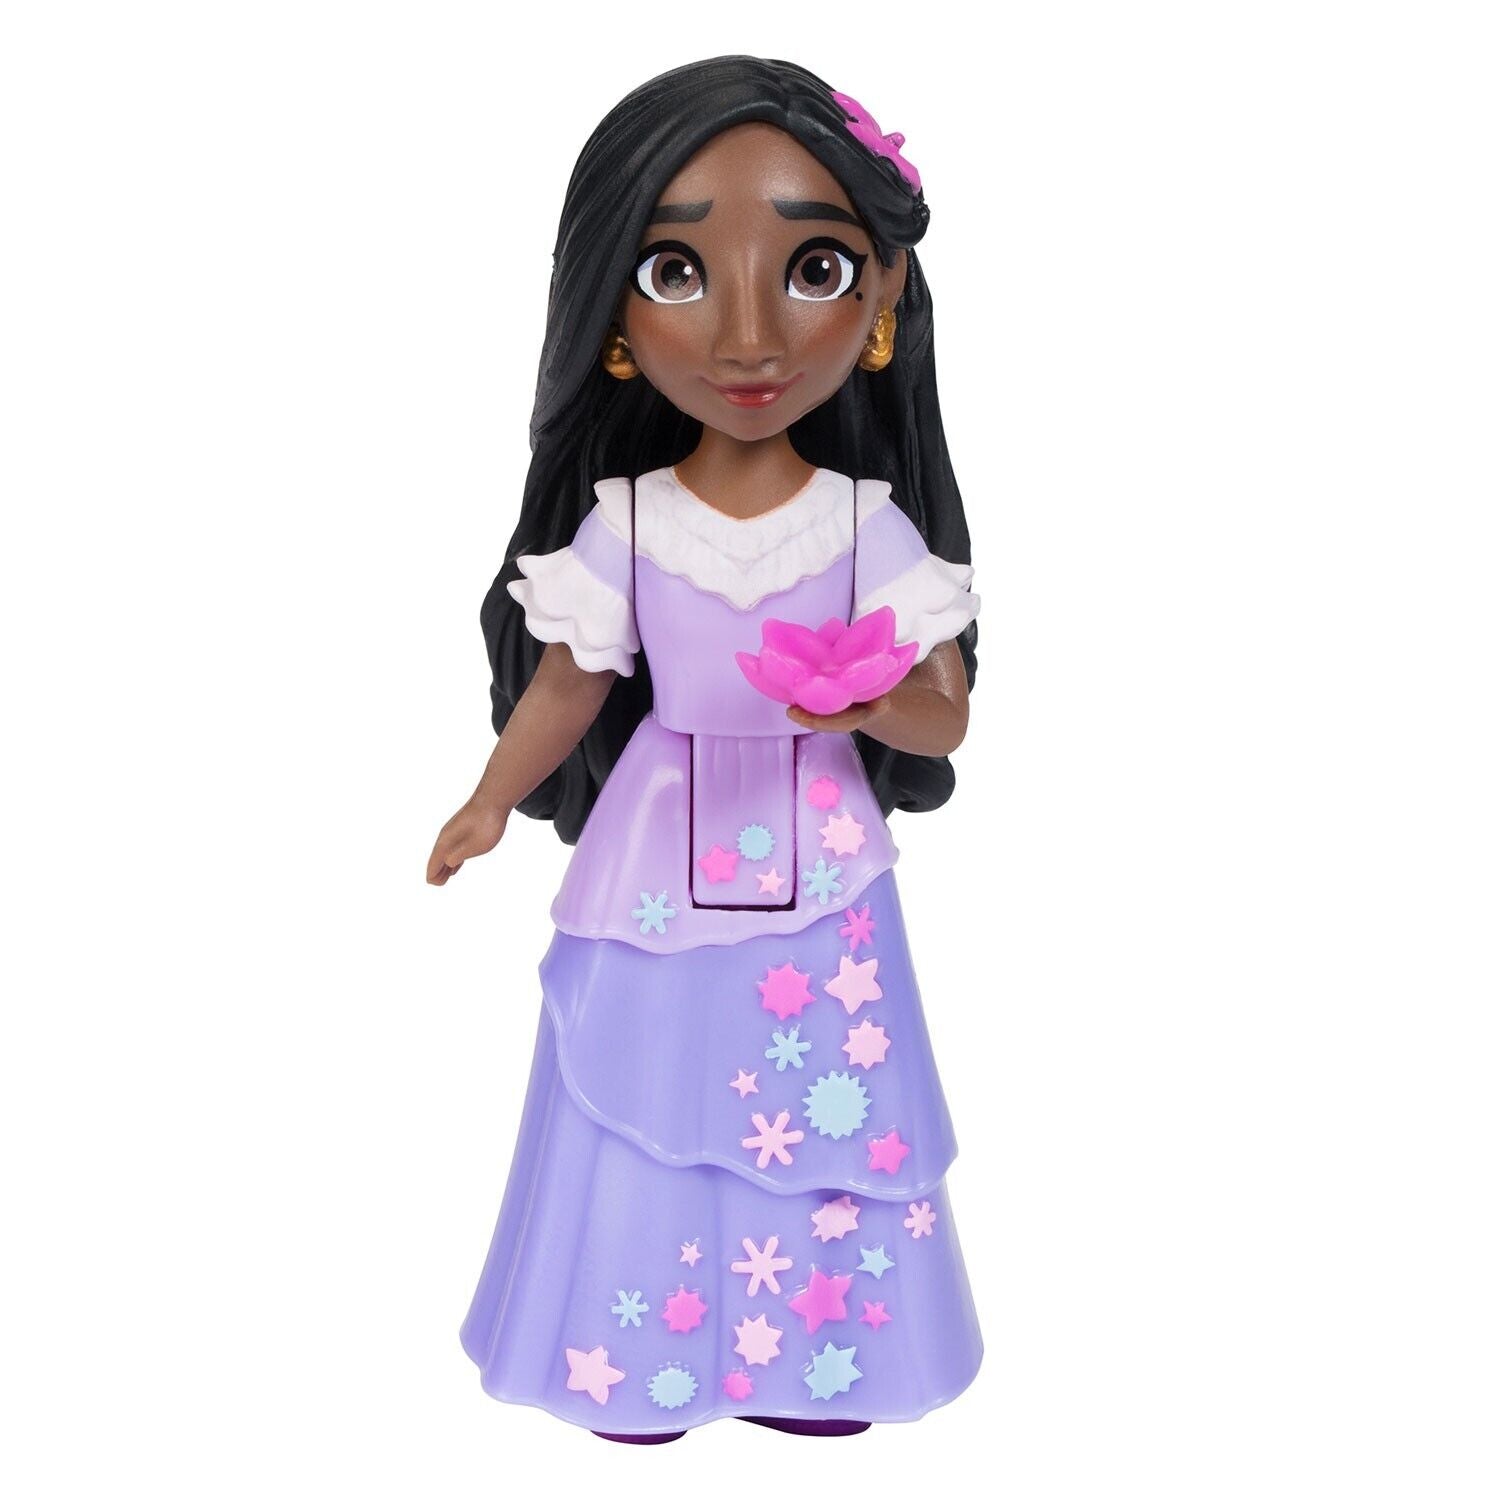 "Disney Encanto Isabela Madrigal 3" Small Doll - Brand New"